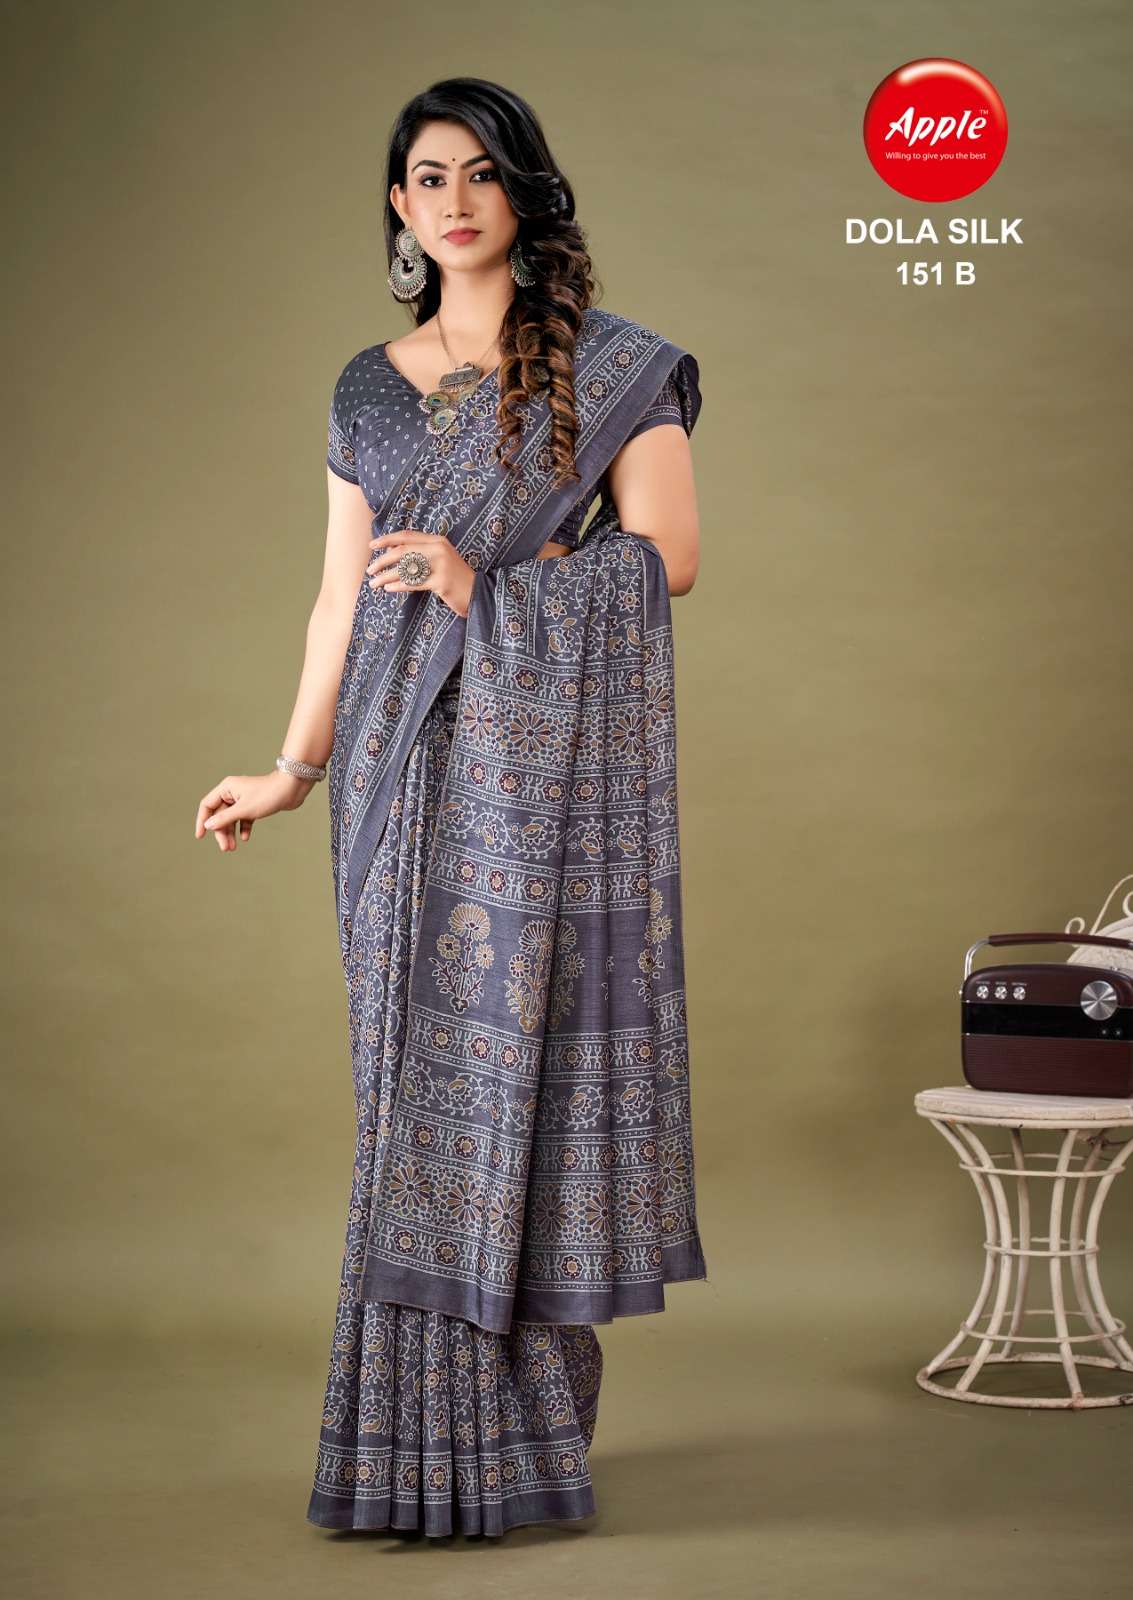 apple saree dola silk 149-151 adorable four color matching saris collection 